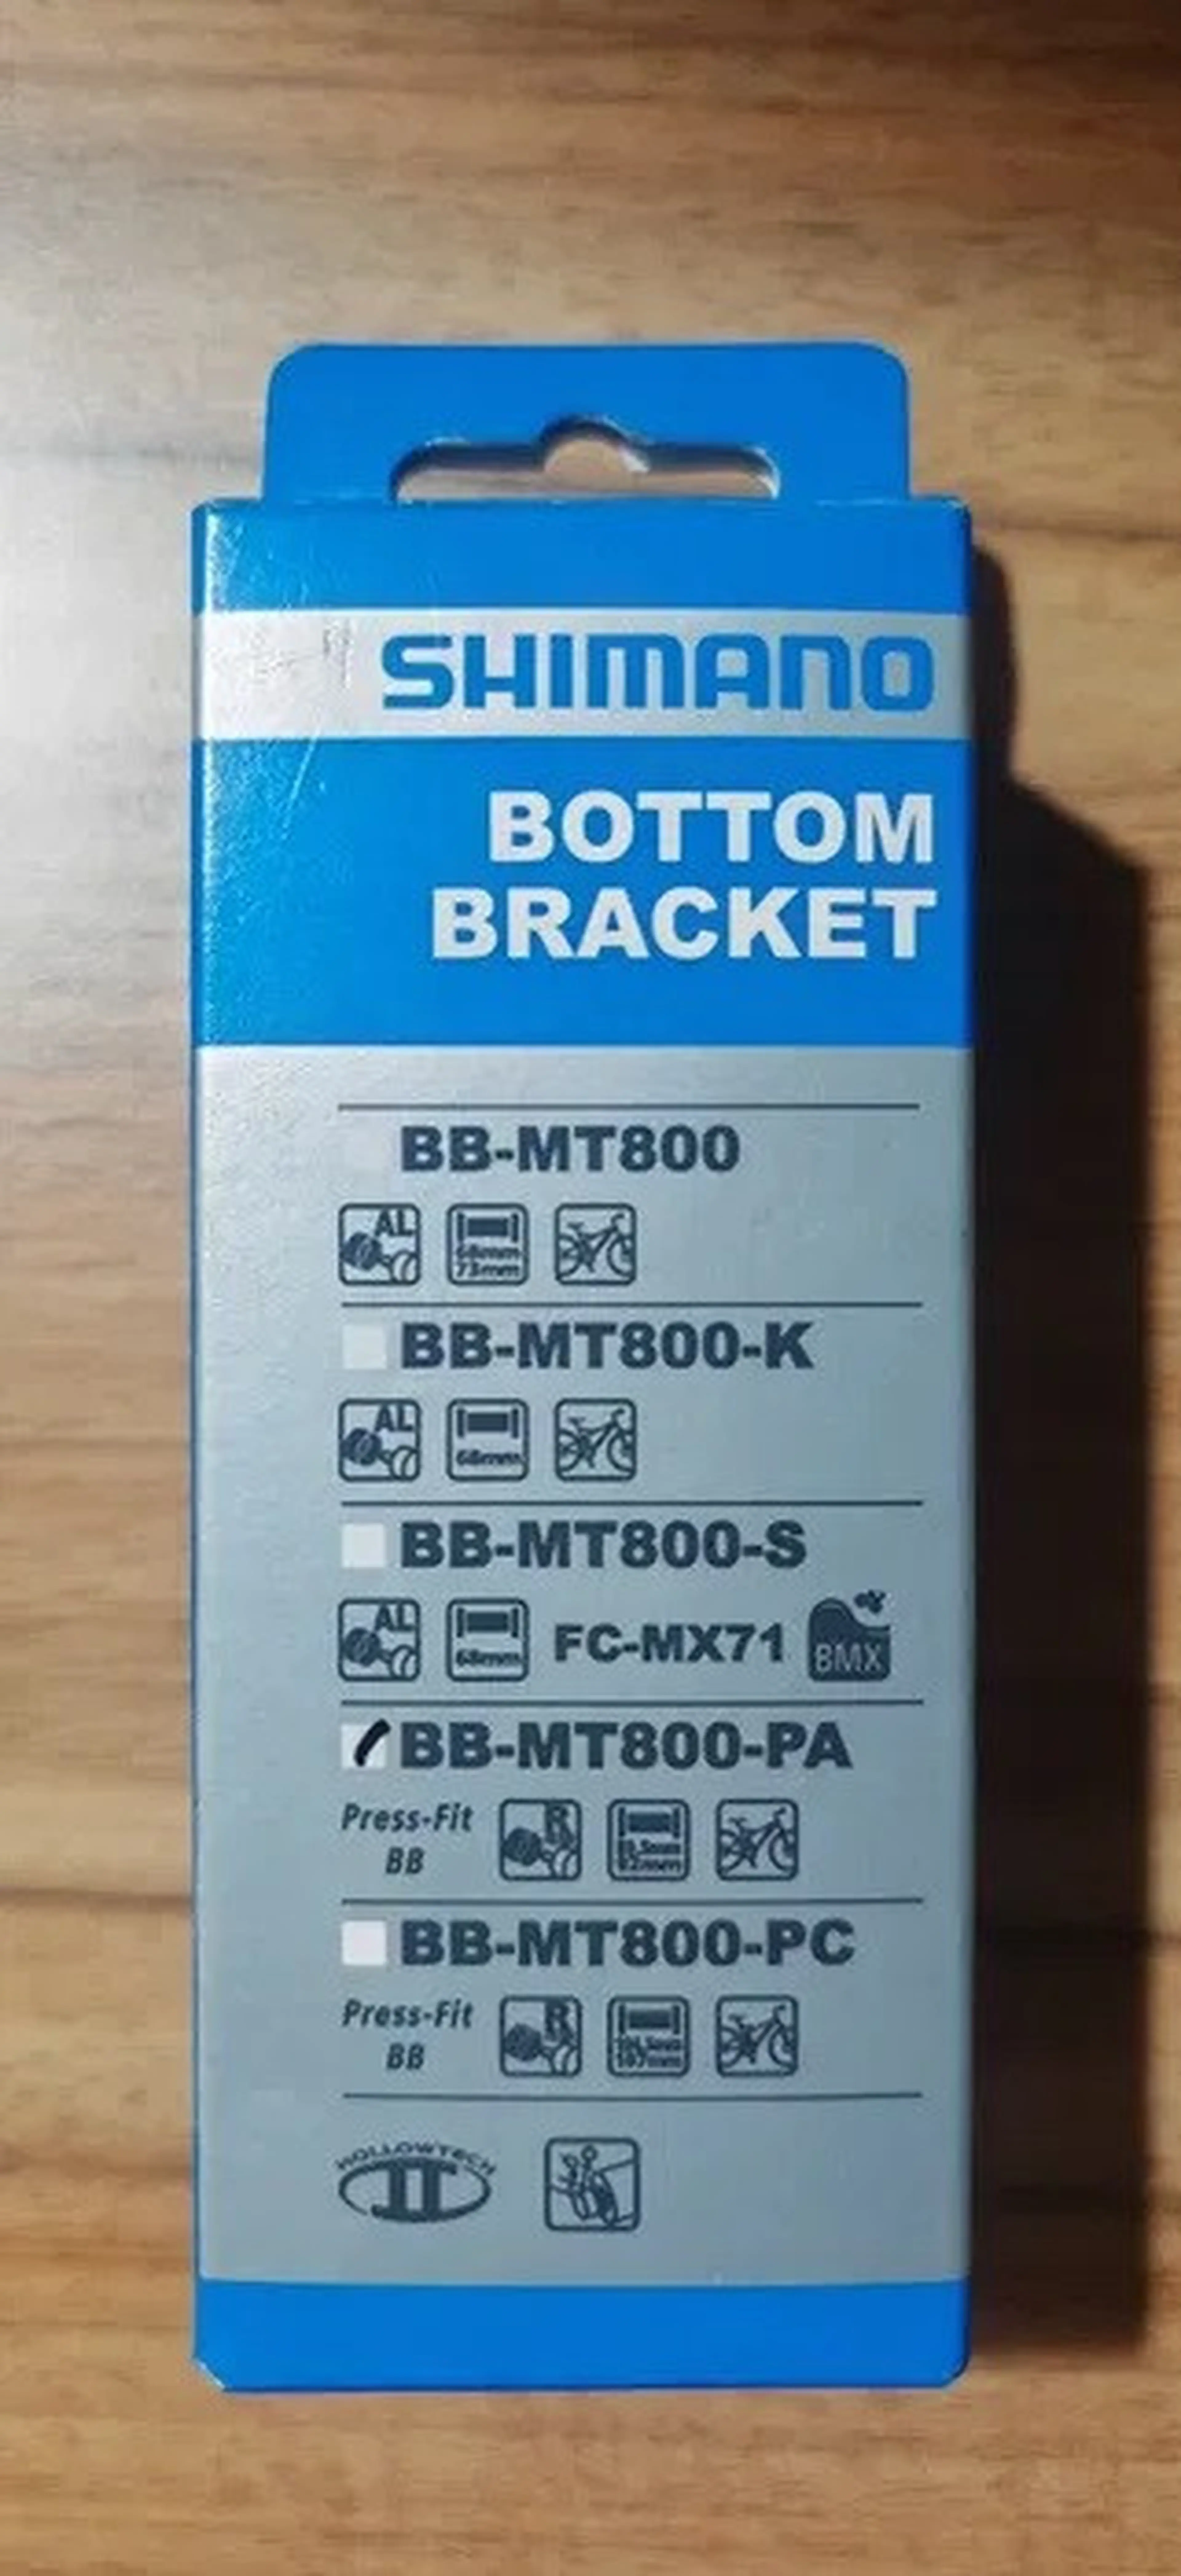 Image Bottom bracket press fit BB-MT-800-PA